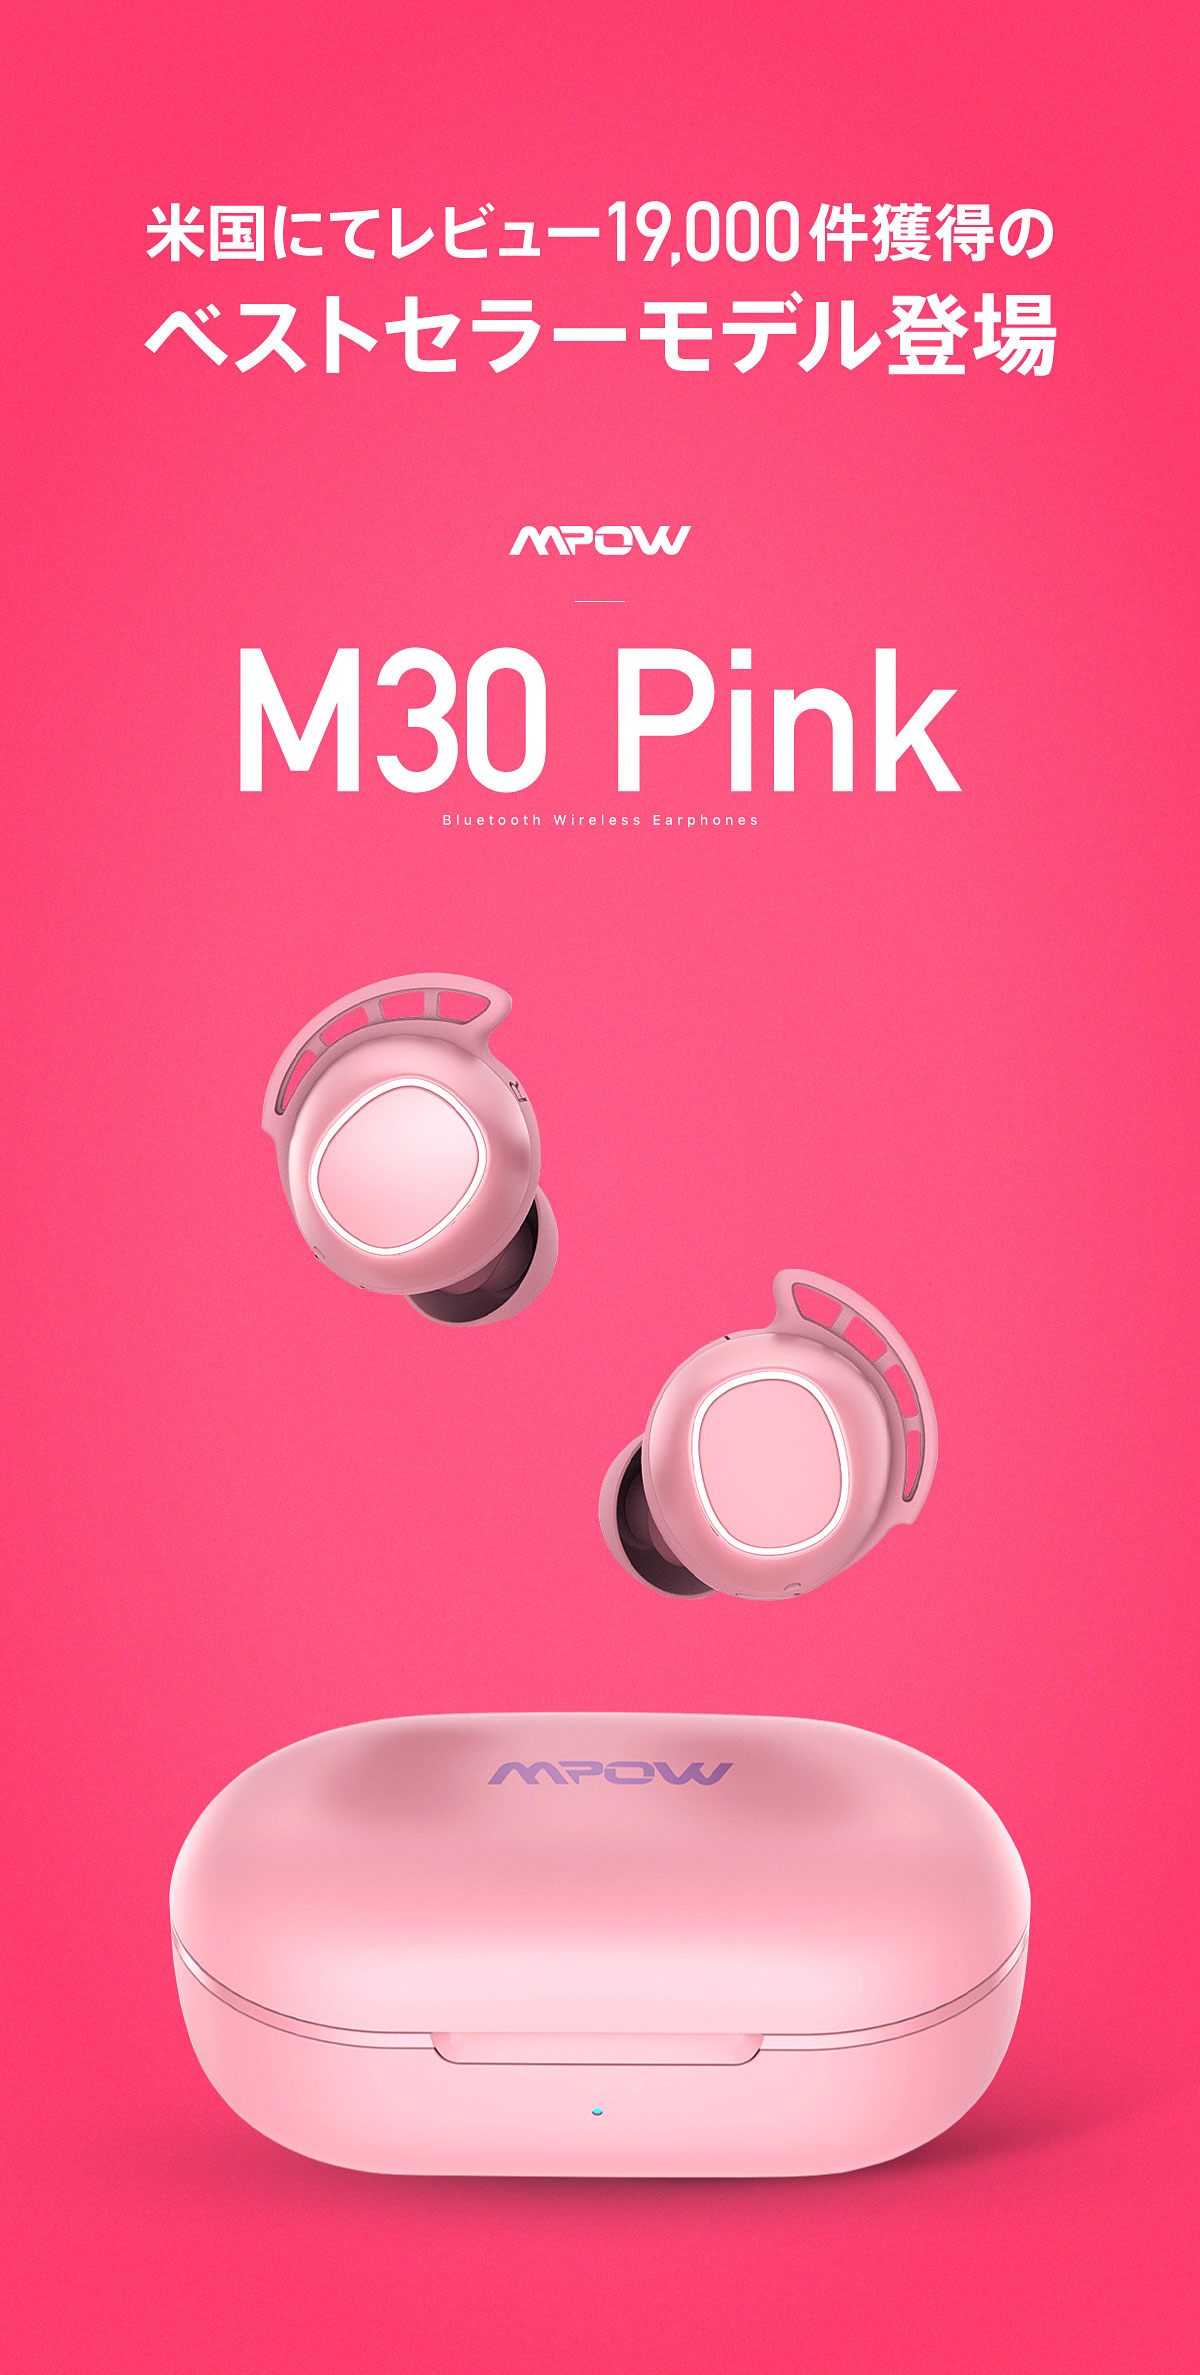 Mpow M30 ワイヤレスイヤホン ピンク 無線 高音質 防水 IPX7 両耳 左右分離 自動ペアリング bluetooth5.0 ブルートゥース 最大25時間再生 bluetooth 音楽 通話 マイク付き iphone かわいい お洒落 女性 誕生日 プレゼント 365日出荷